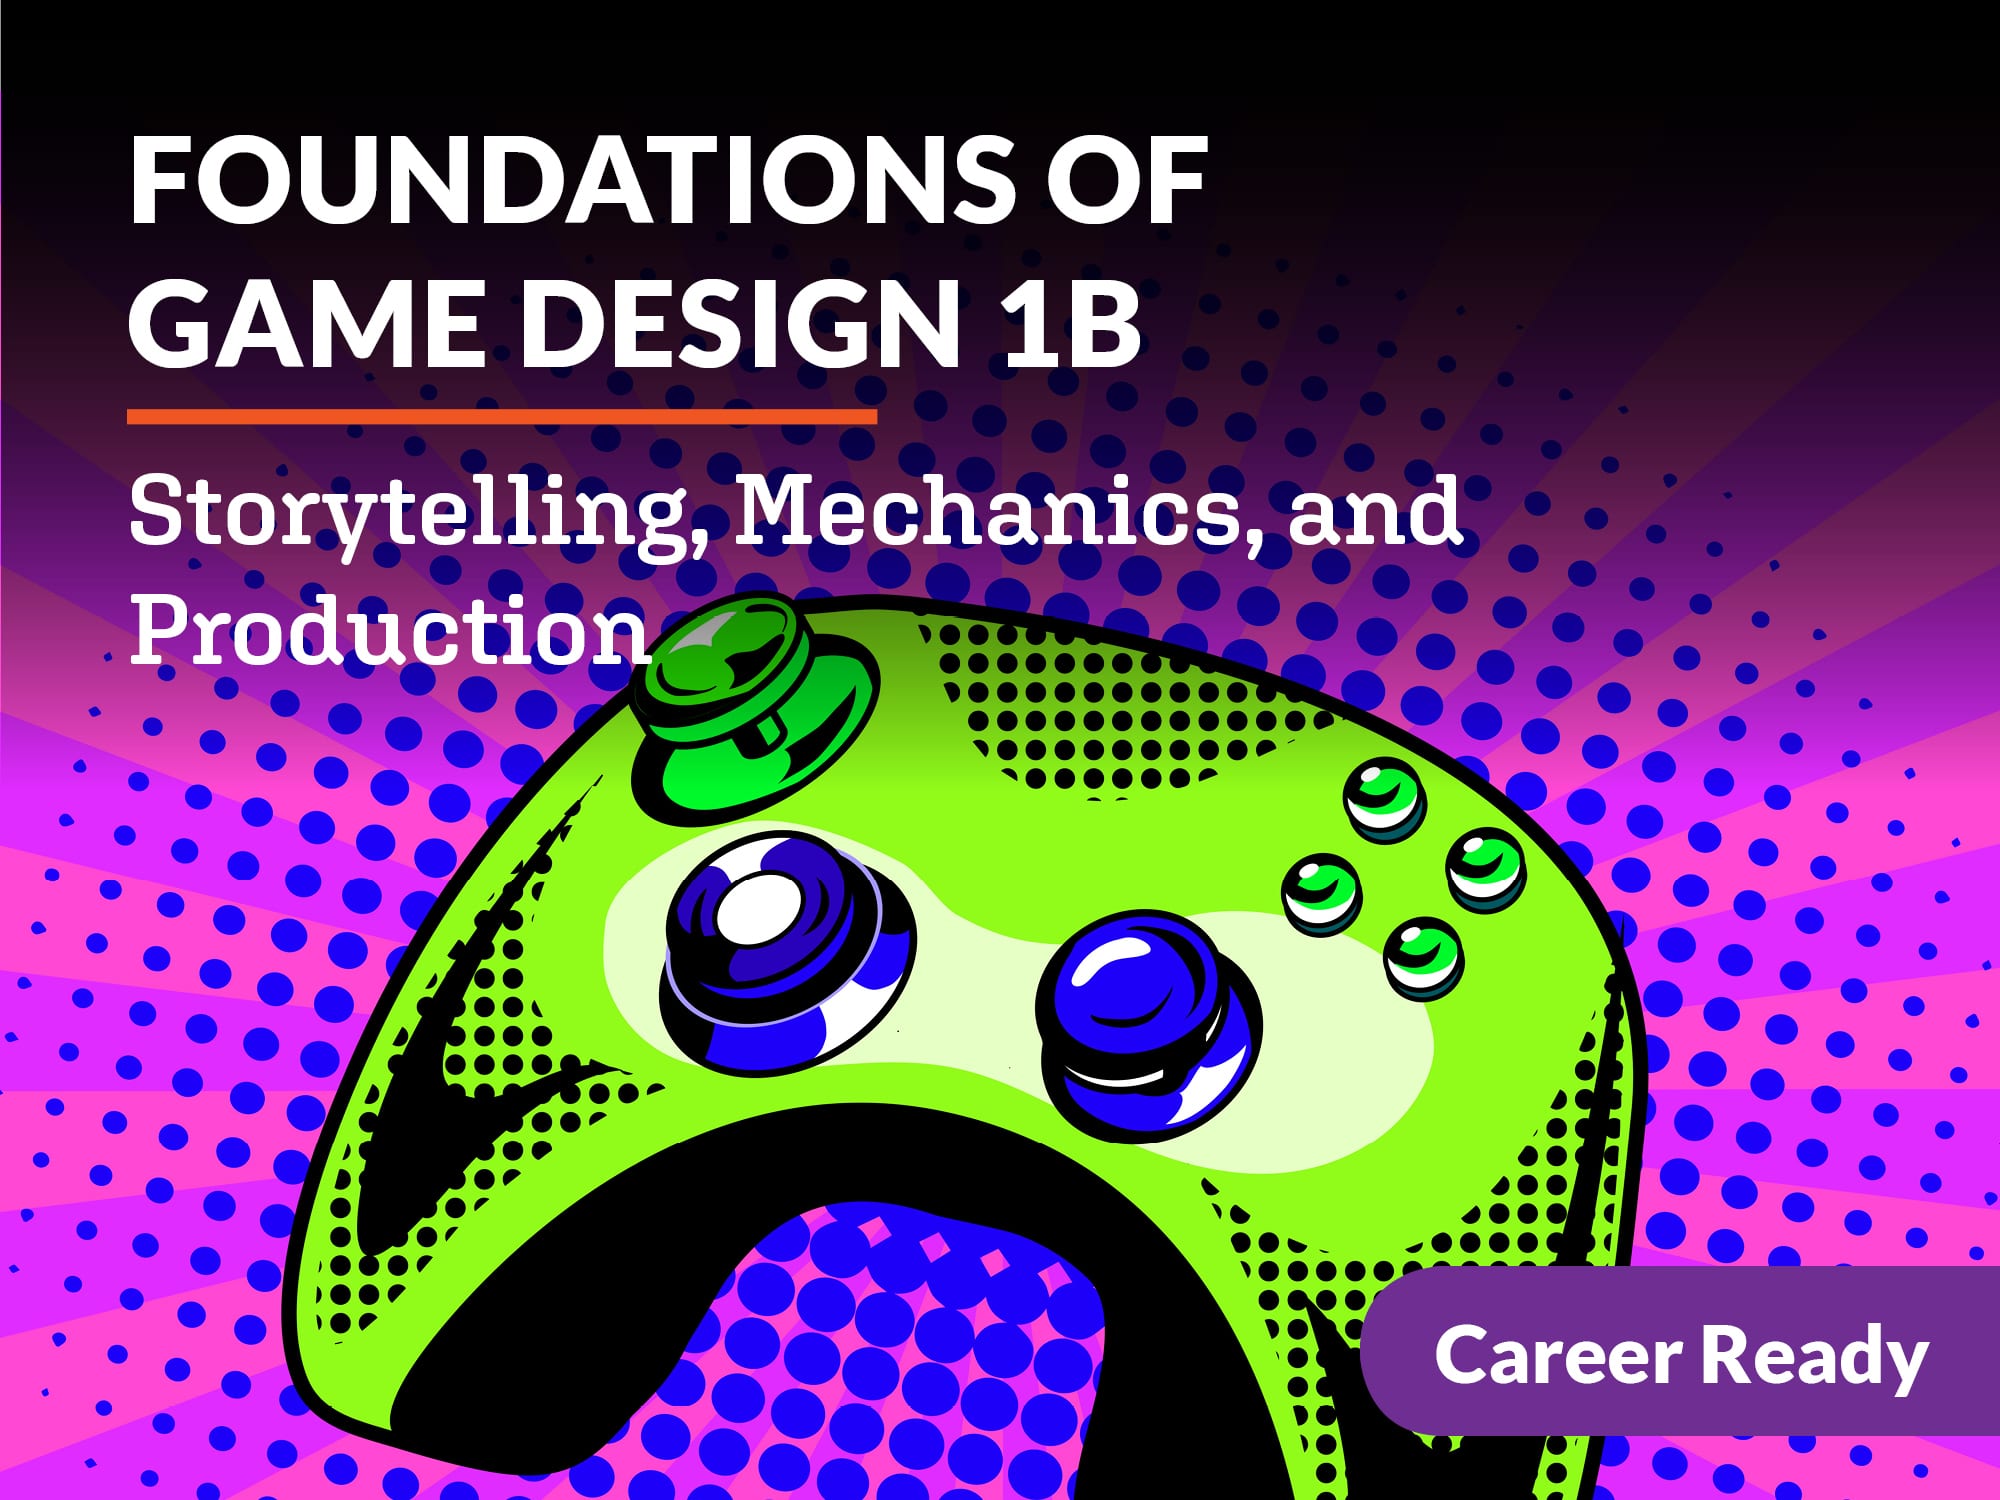 Foundations of Game Design 1b: Storytelling, Mechanics, Production